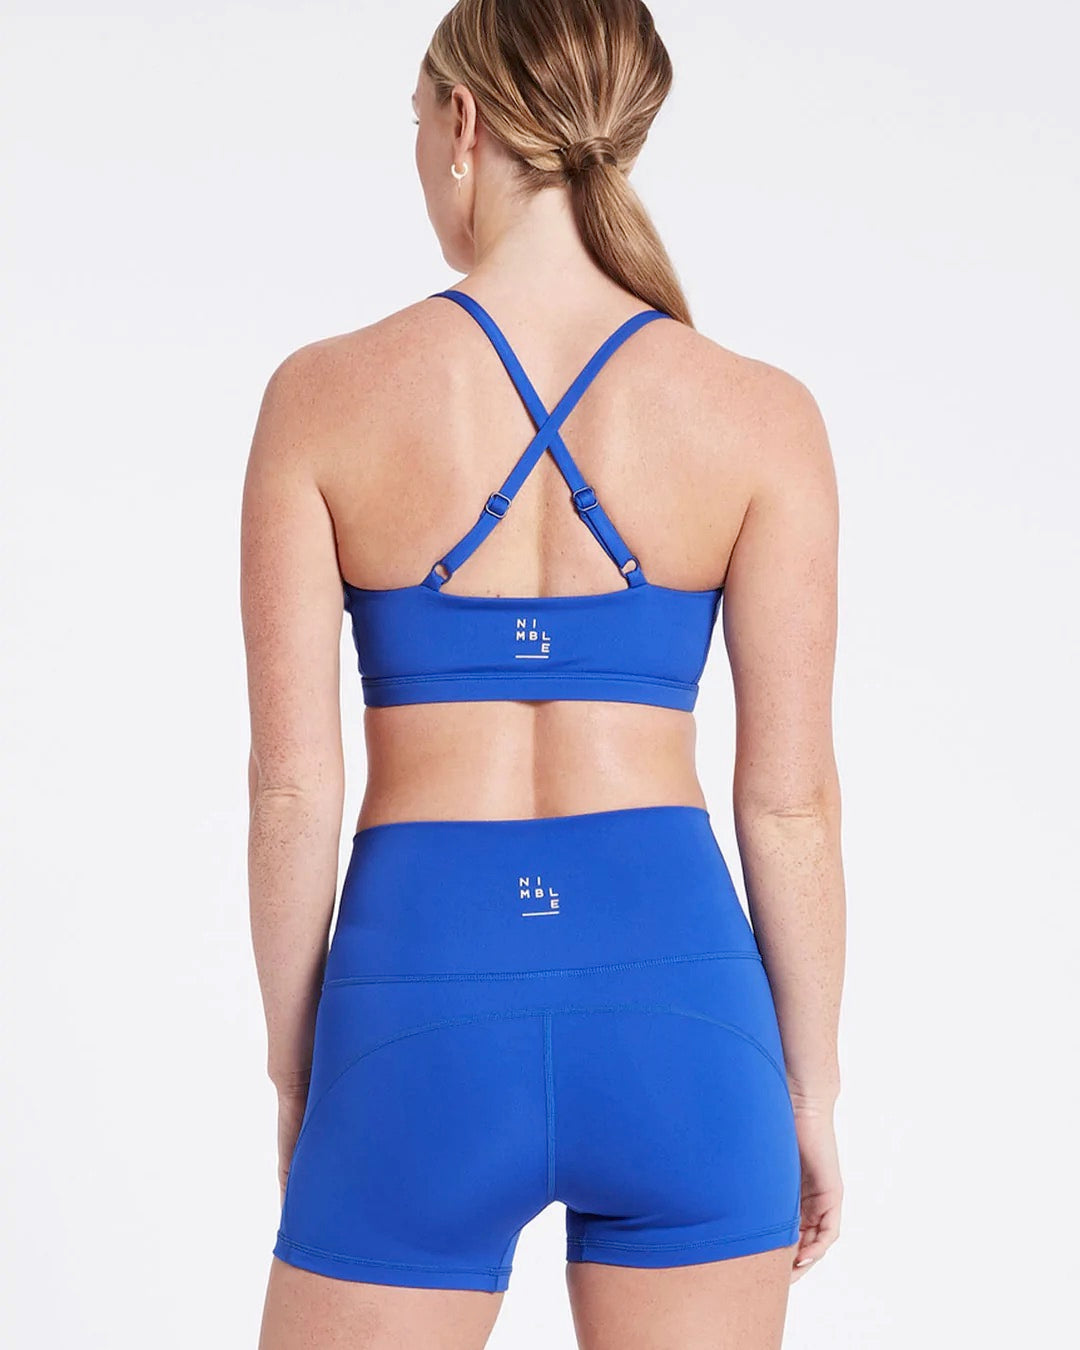 Sweat To Splash Bra II - Azure Blue Sports Bras & Crops by Nimble - Prae Store